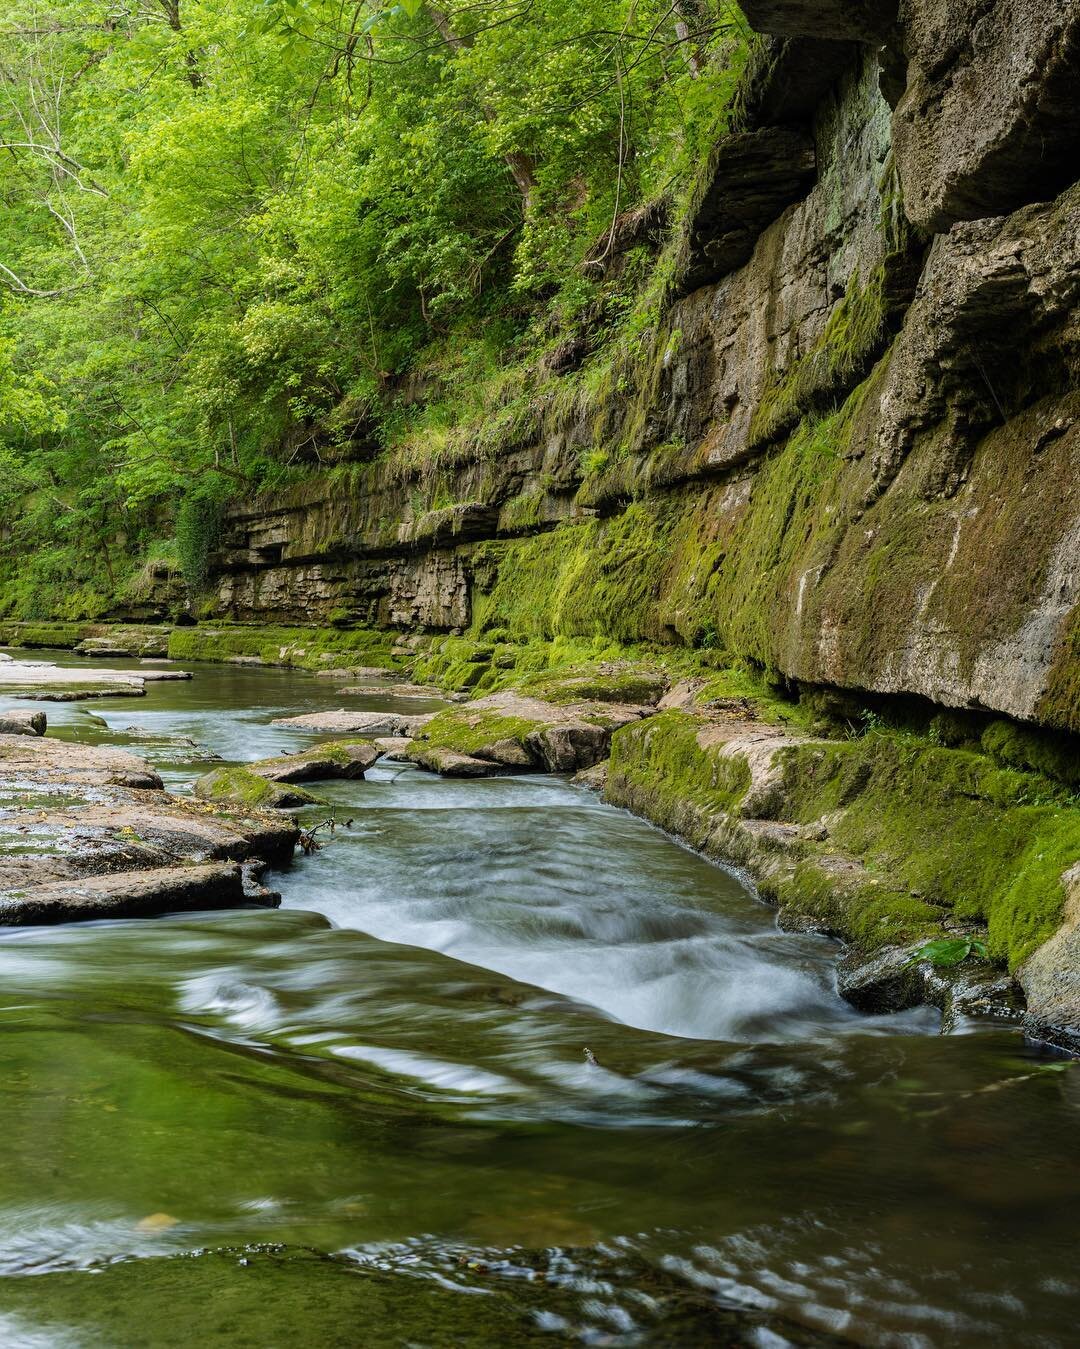 When a place exceeds your expectations👍.
.
#creek #lowerhowardscreek #waterfall #waterfallwednesday #kyhikes #hiking #clarkcountyky #travelky #kentuckyforkentucky  #kyproud #mysouthernliving  #bluegrass